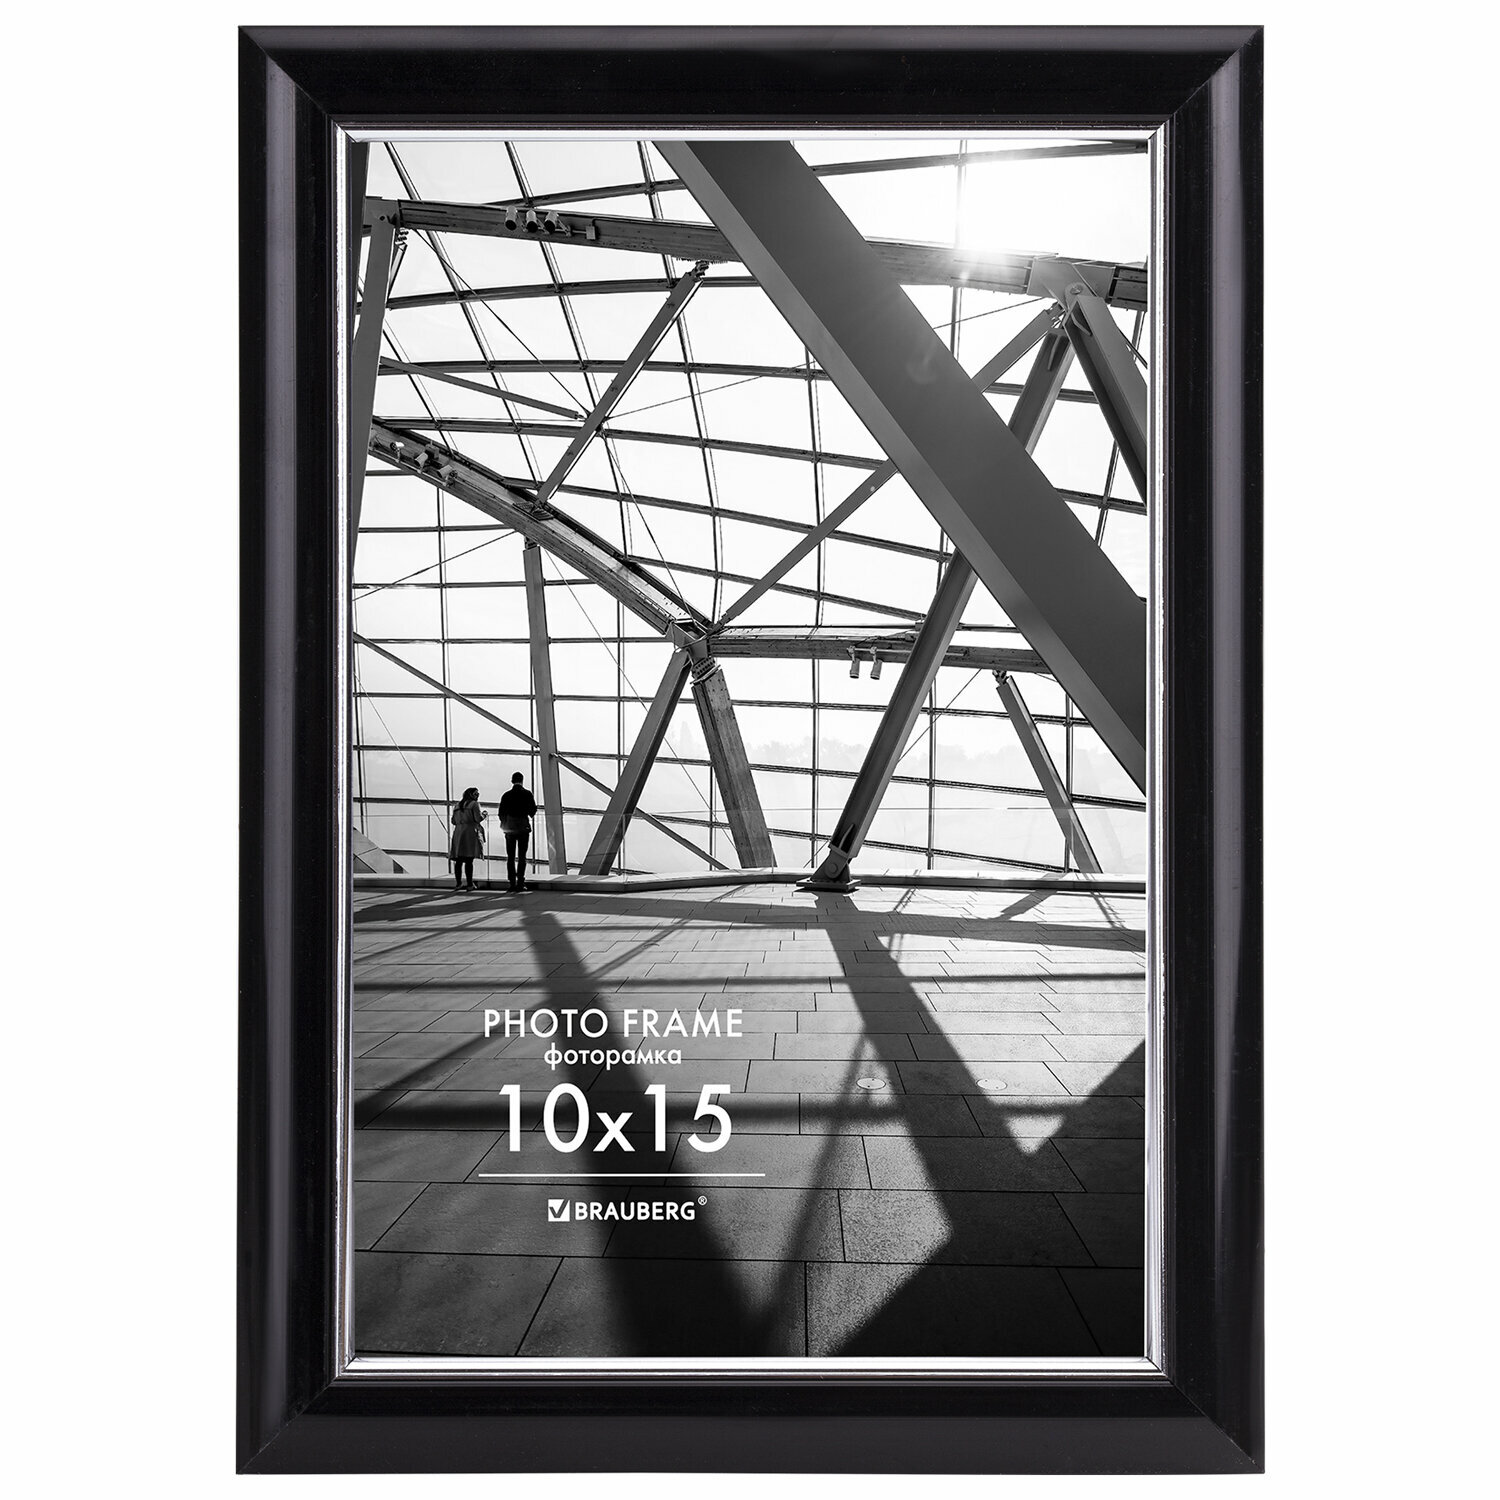 Рамка (фоторамка) для фото фотографий картин грамот на стену А6 10х15 см небьющаяся багет 146 мм пластик Brauberg черная/серебро 391233